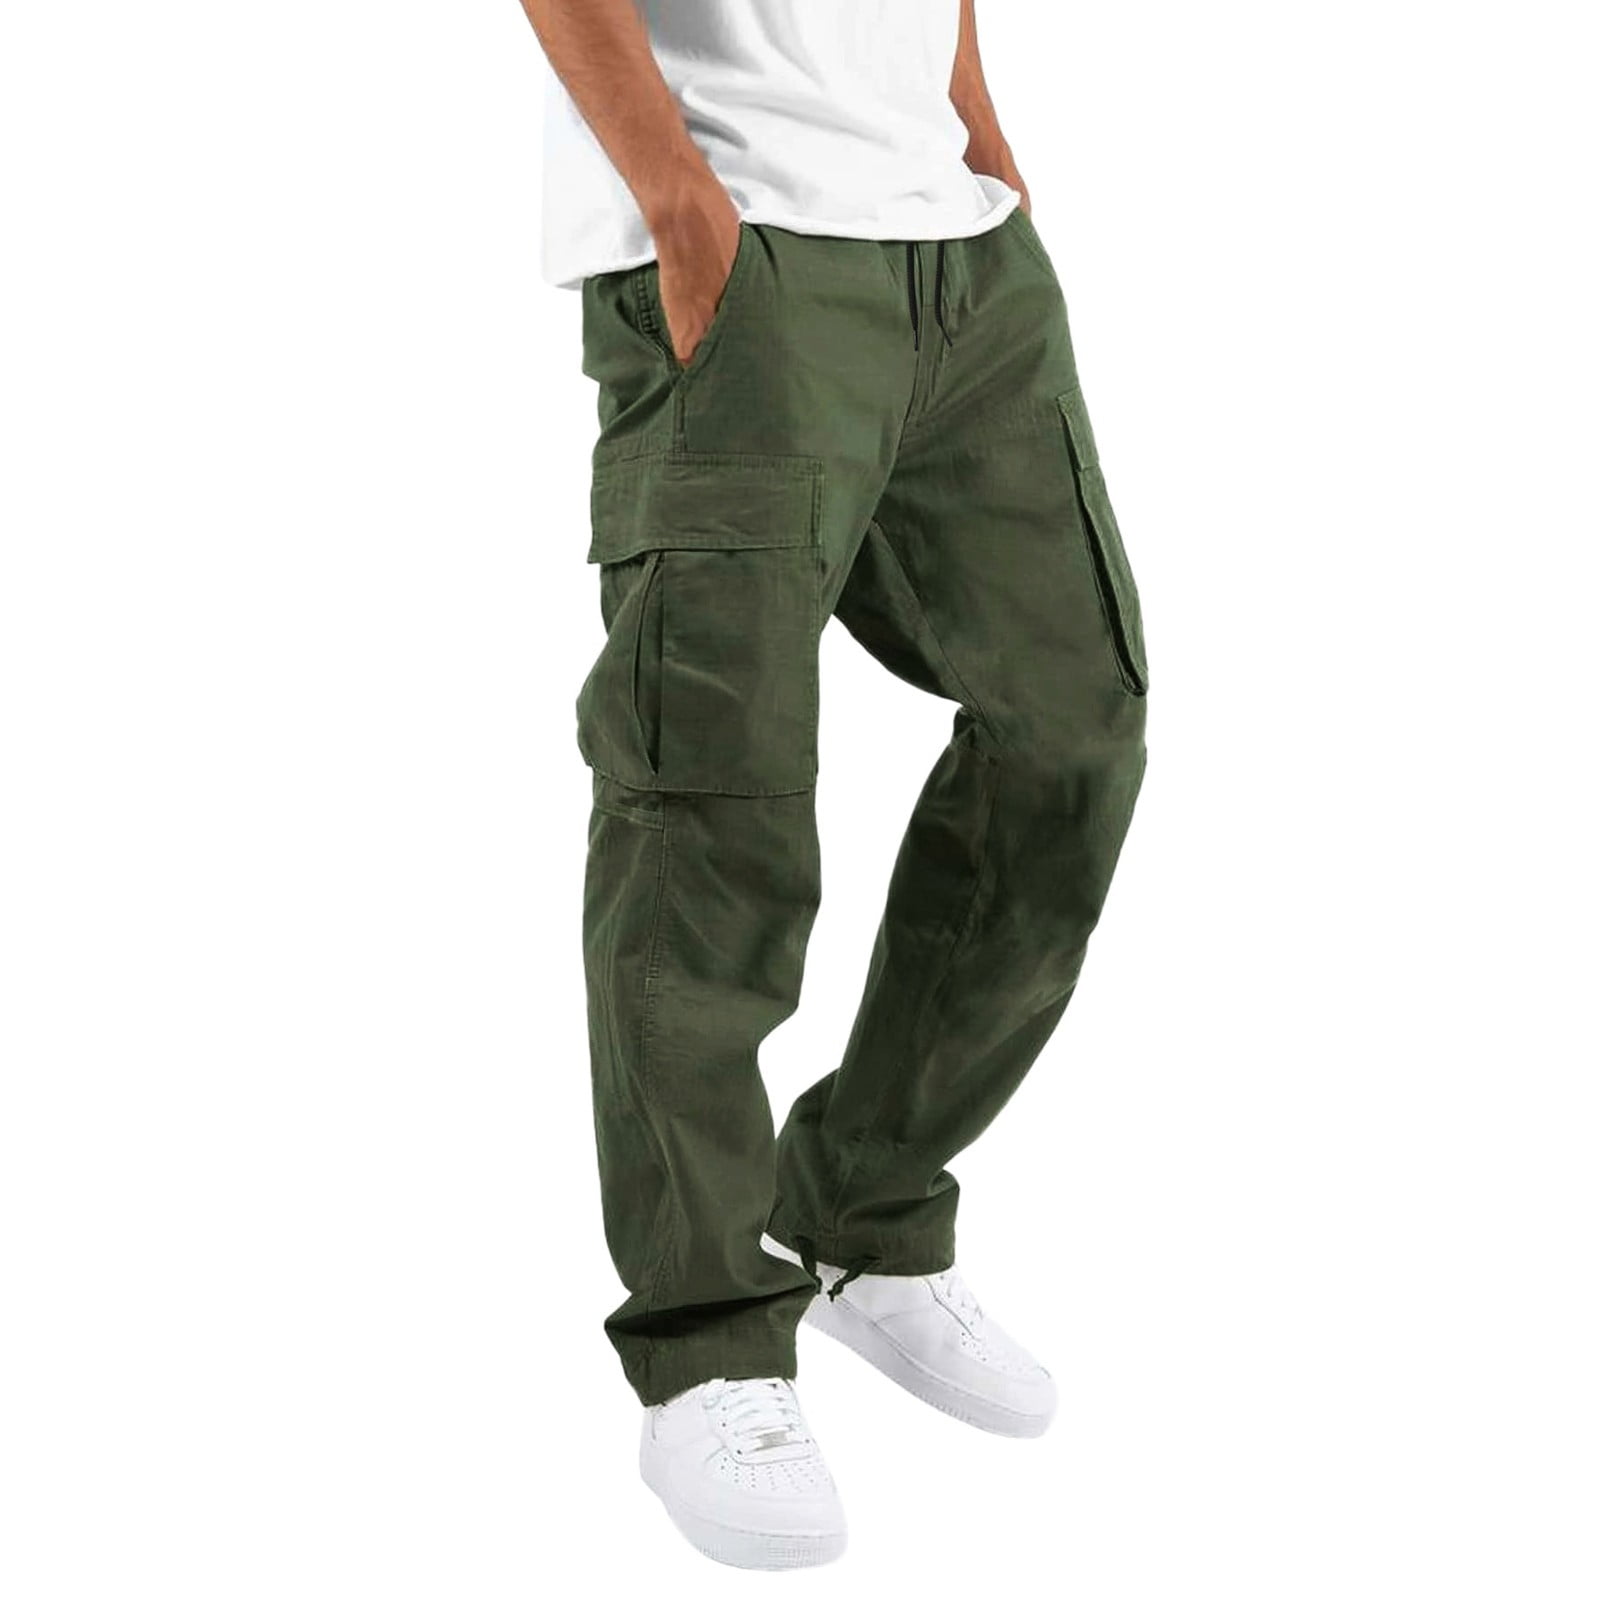 Baggy Jeans- Olive Green Cargo Pocket Denim Jeans for Men Online | Powerlook